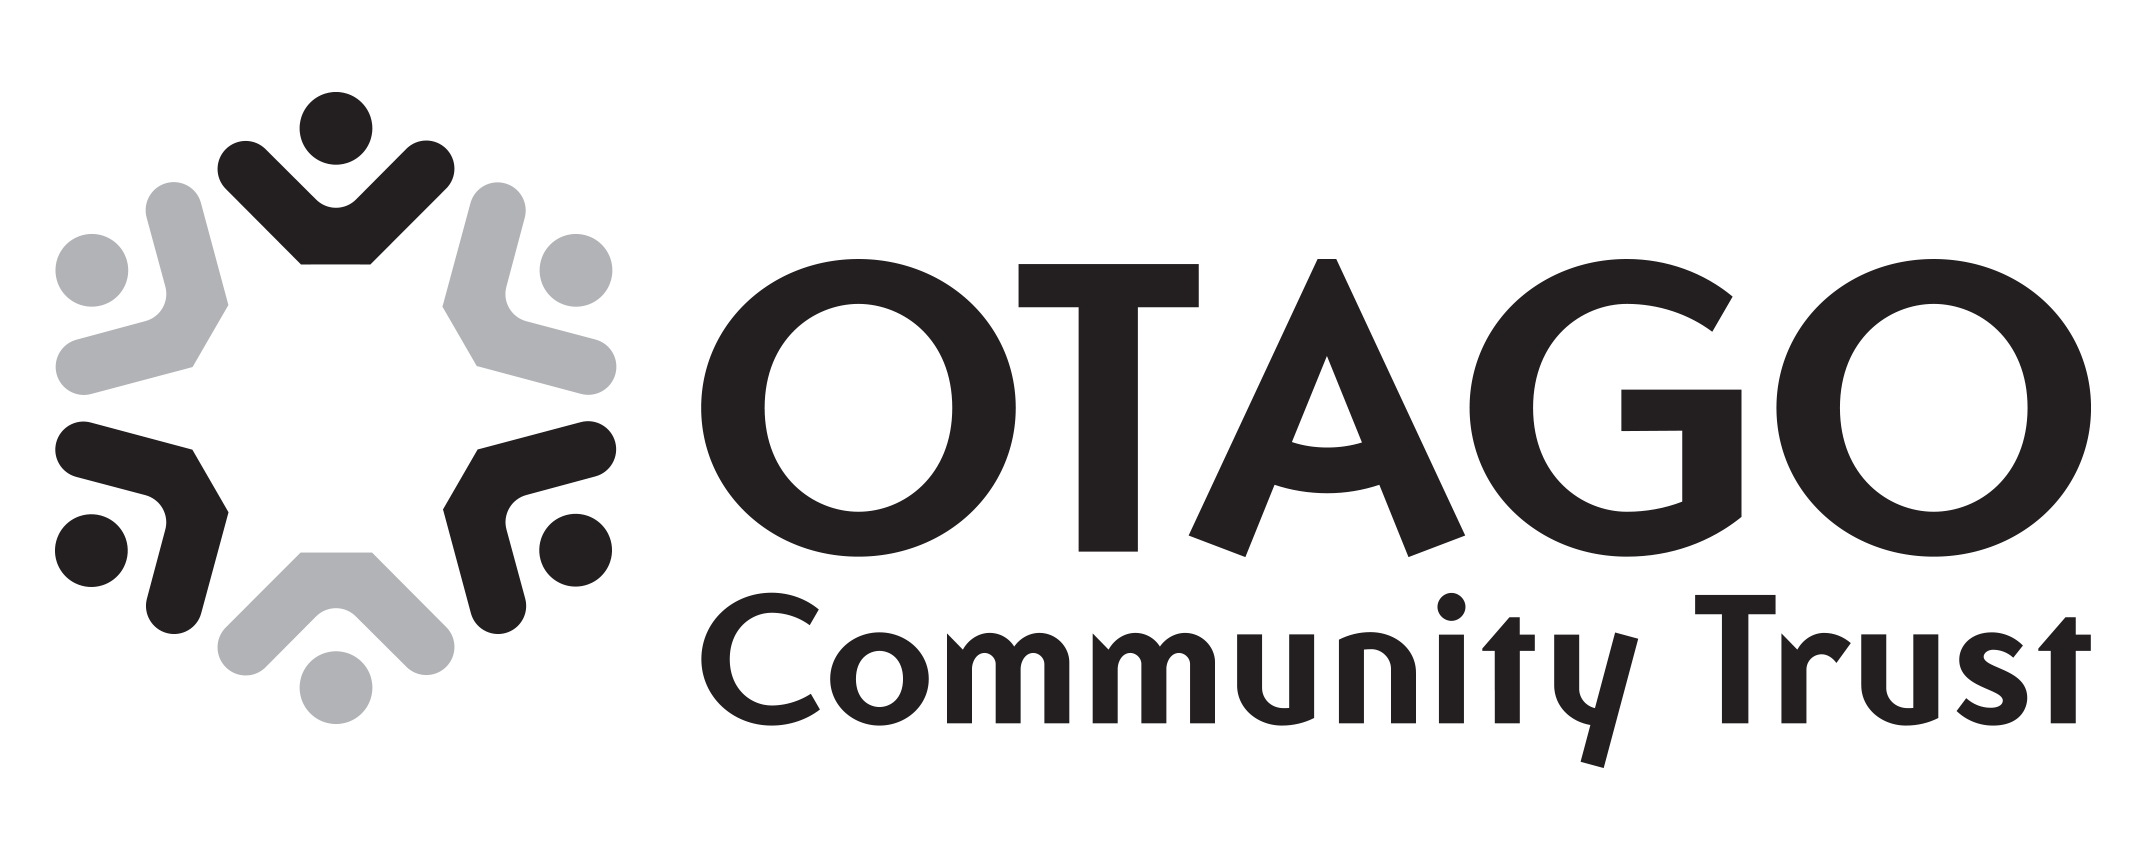 Otago Community Trust Logo